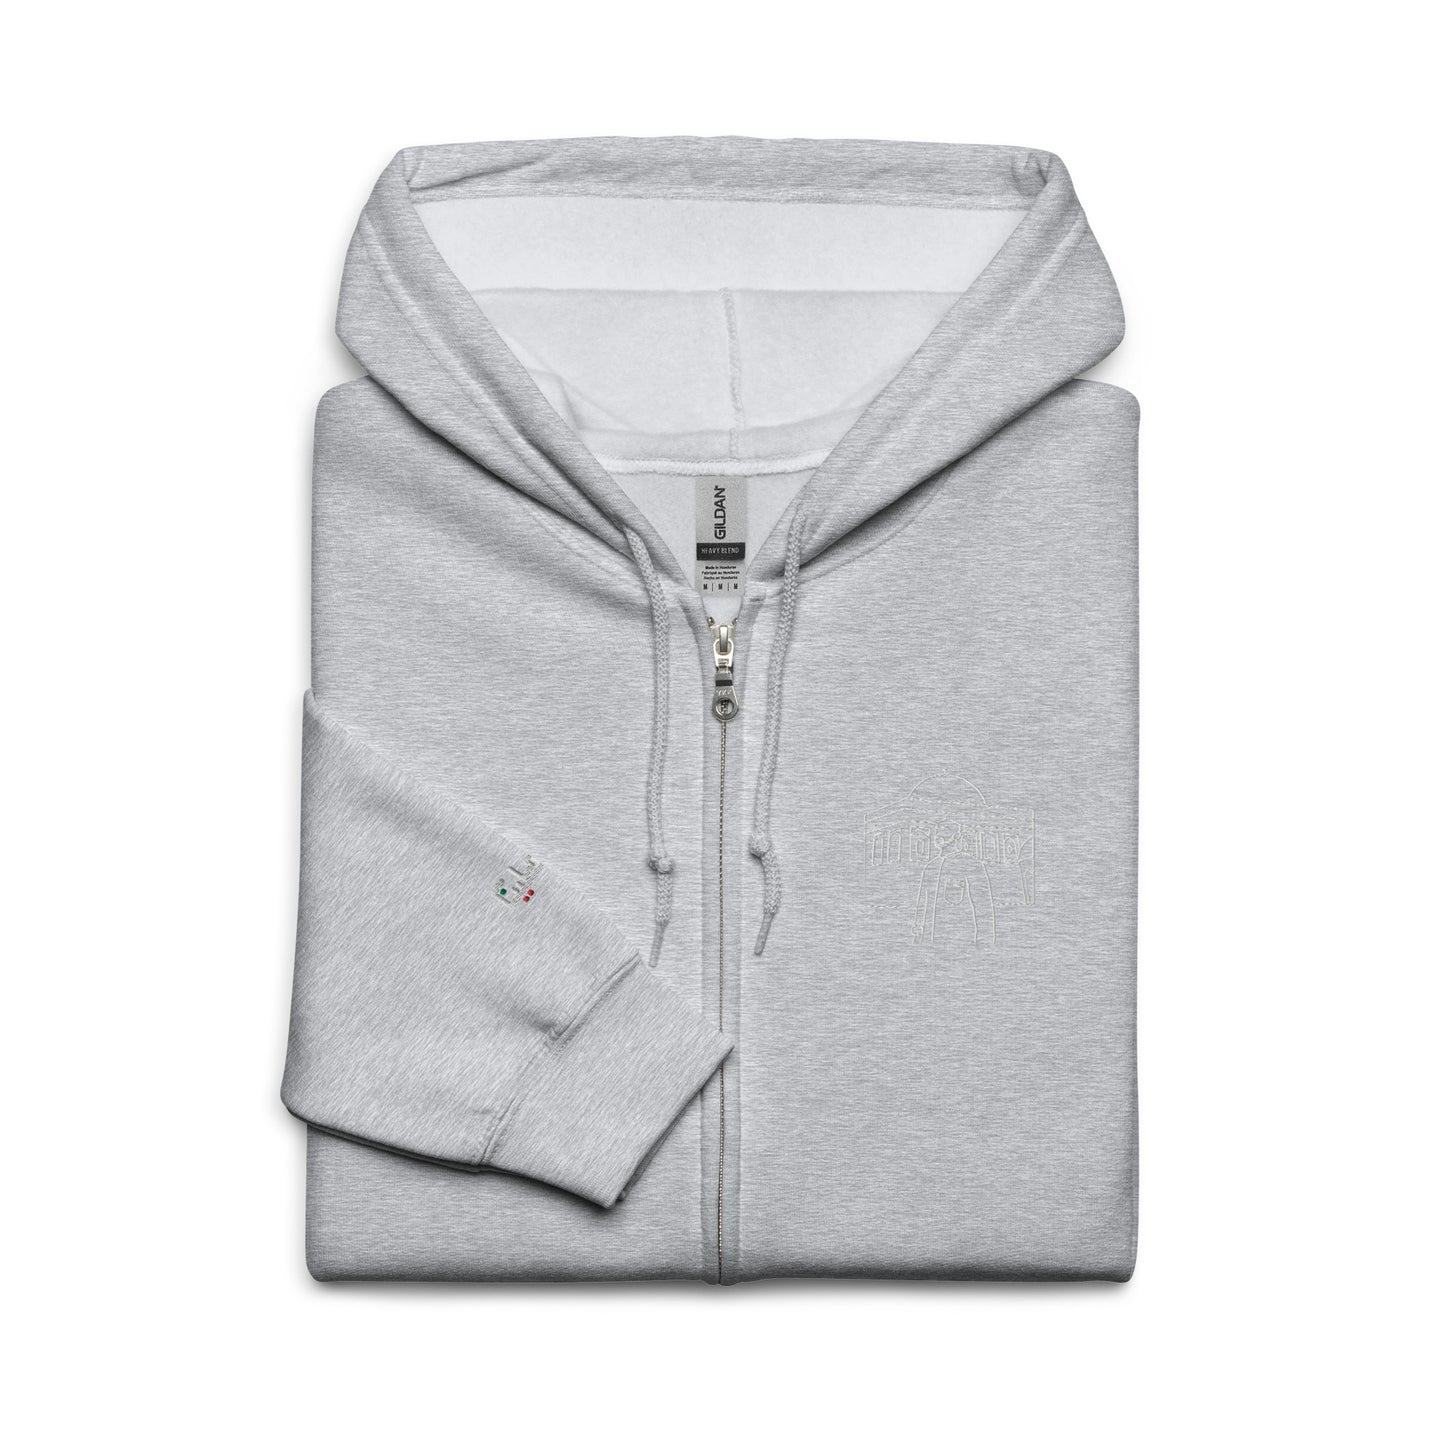 Outline zip hoodie + Wrist Personalisation